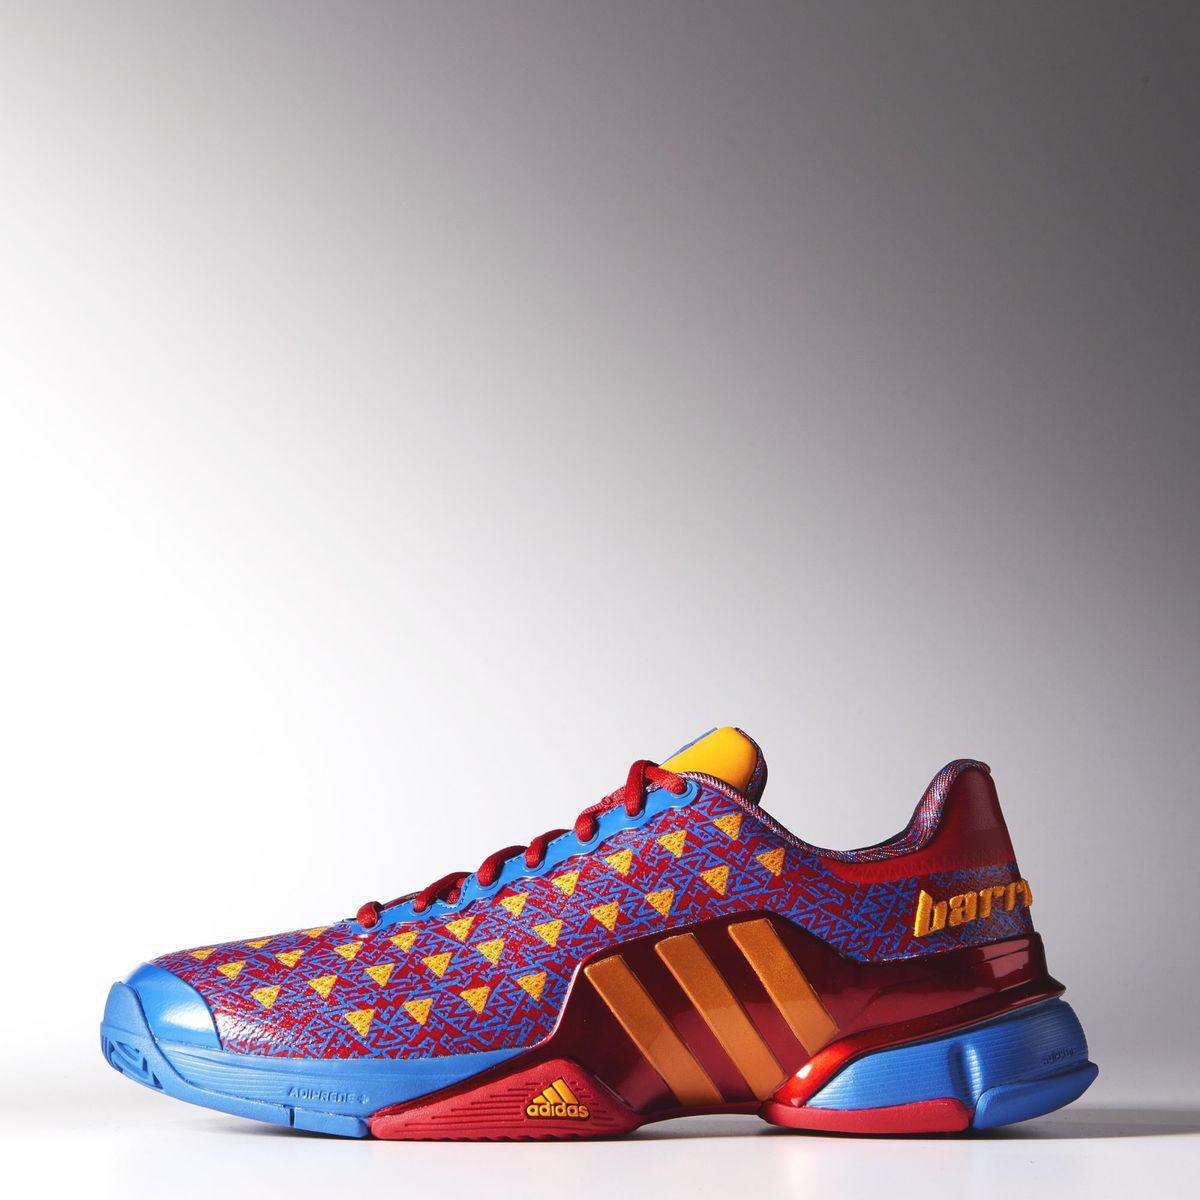 Adidas Mens Barricade 2015 Saksaywaman Tennis Shoes - Limited Edition ...